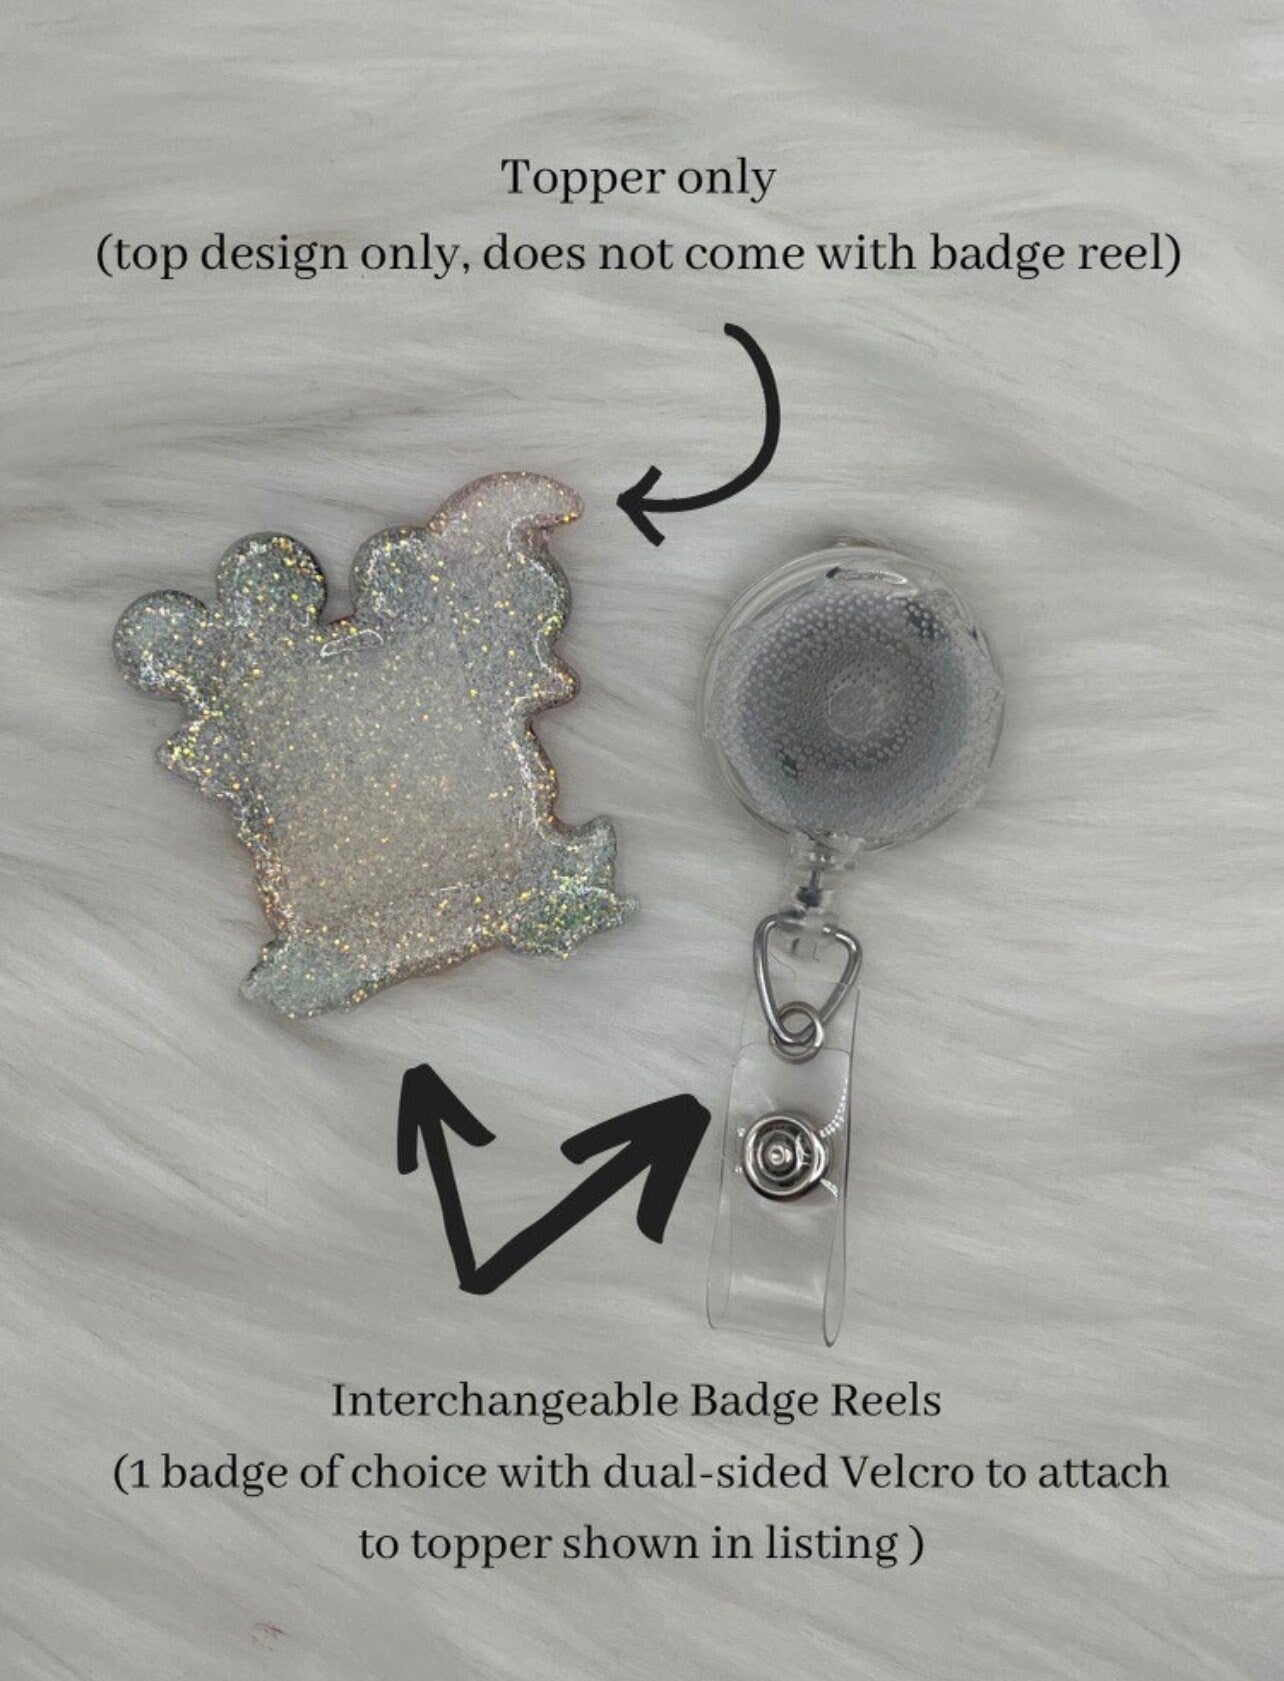 Roll tide badge reel- elephant badge- football badge reel- mri safe- lanyard- interchangeable badge- gifts for her- glitter- cute badge reel